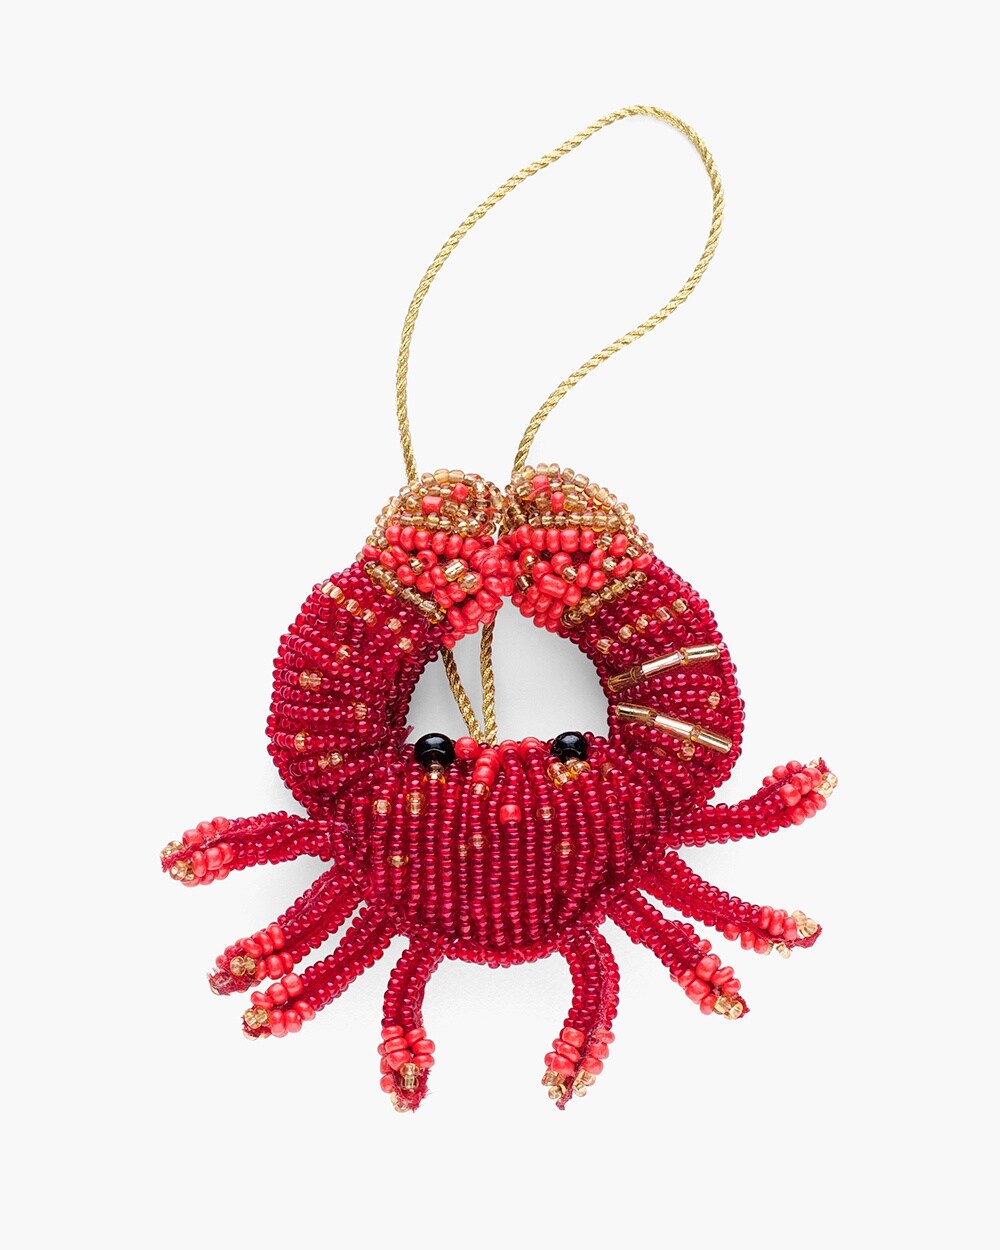 Beaded Crab Ornament